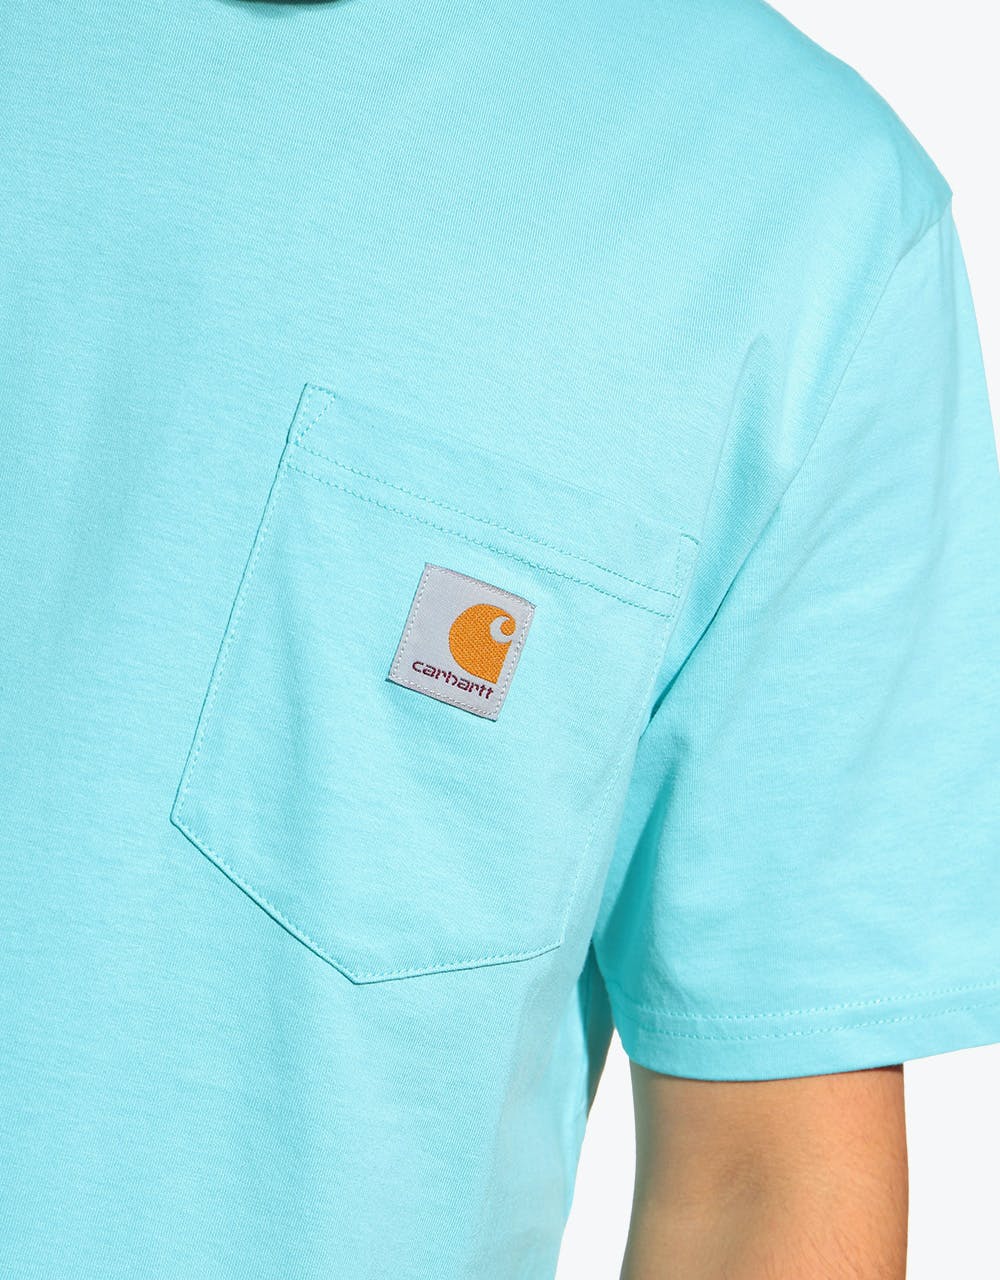 Carhartt WIP S/S Pocket T-Shirt - Window